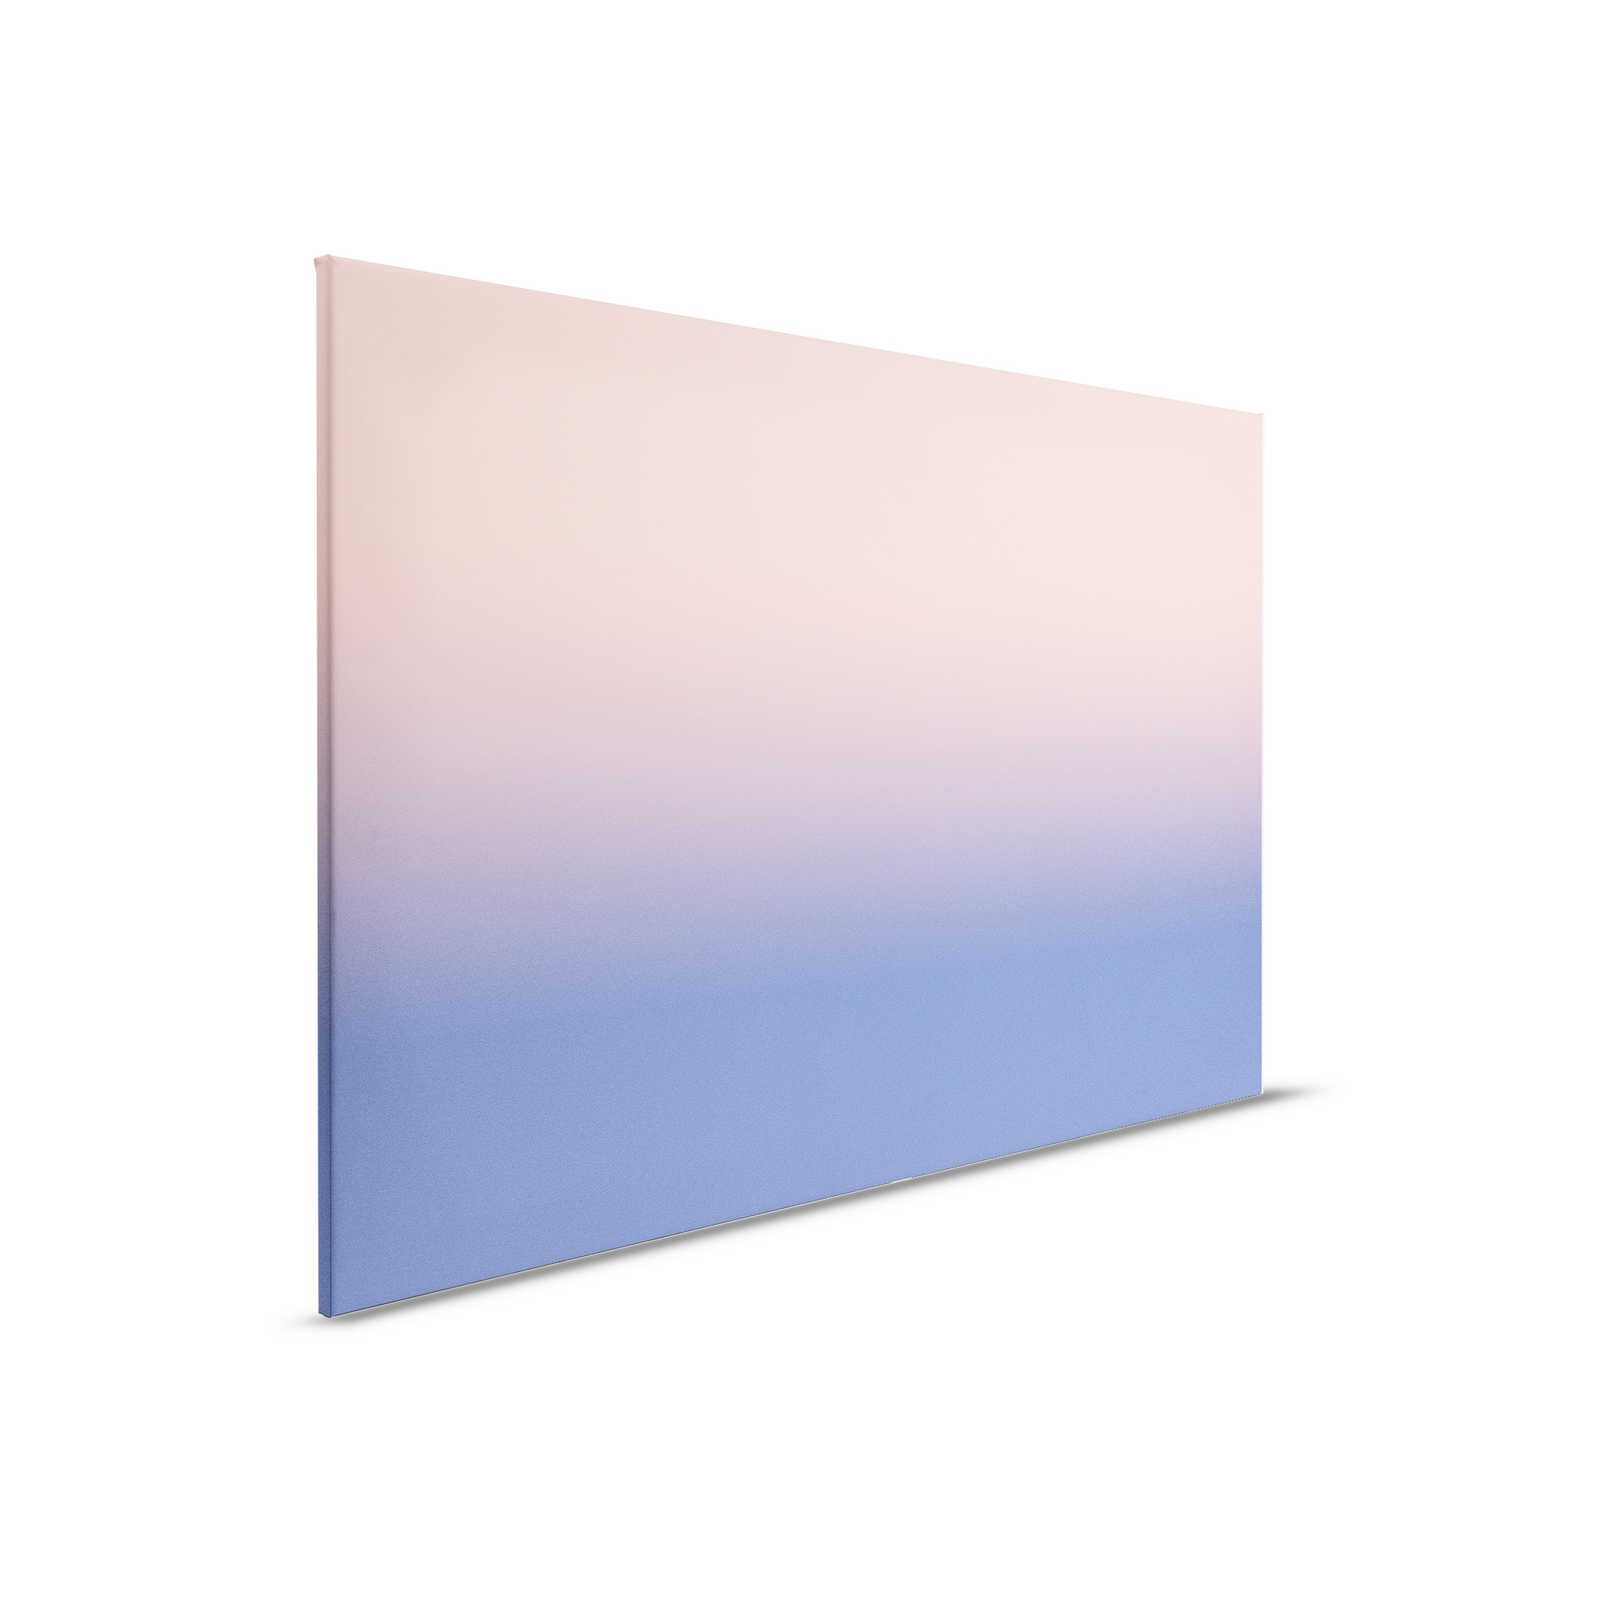         Colour Studio 2 - Ombre Canvas Print Pink & Purple for Girls' Room - 0.90 m x 0.60 m
    